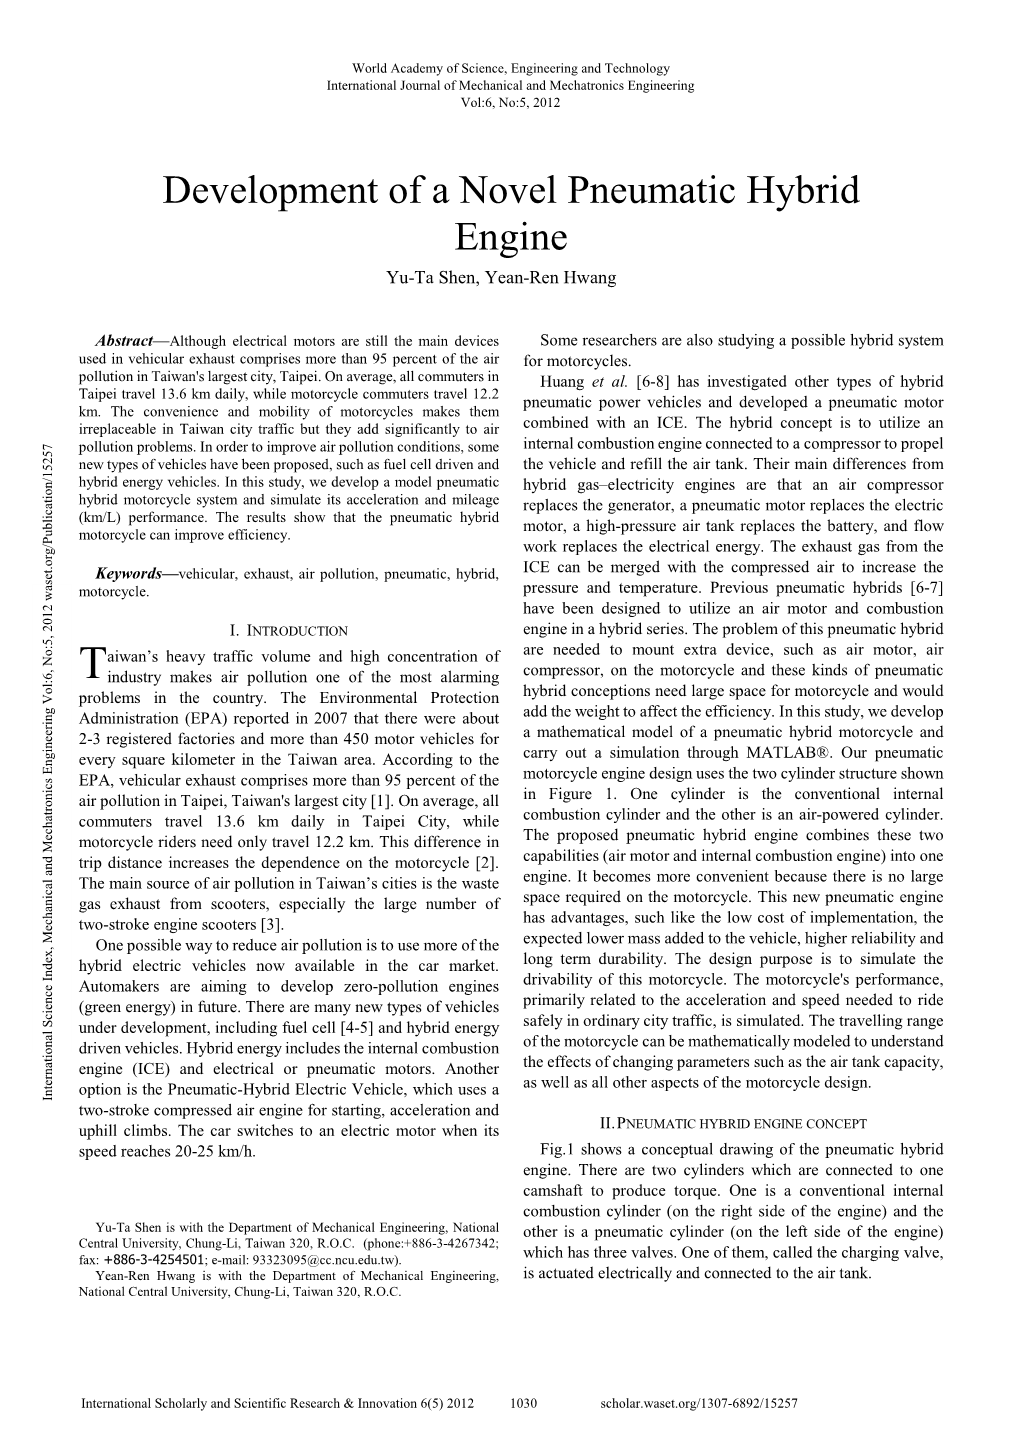 Development of a Novel Pneumatic Hybrid Engine Yu-Ta Shen, Yean-Ren Hwang